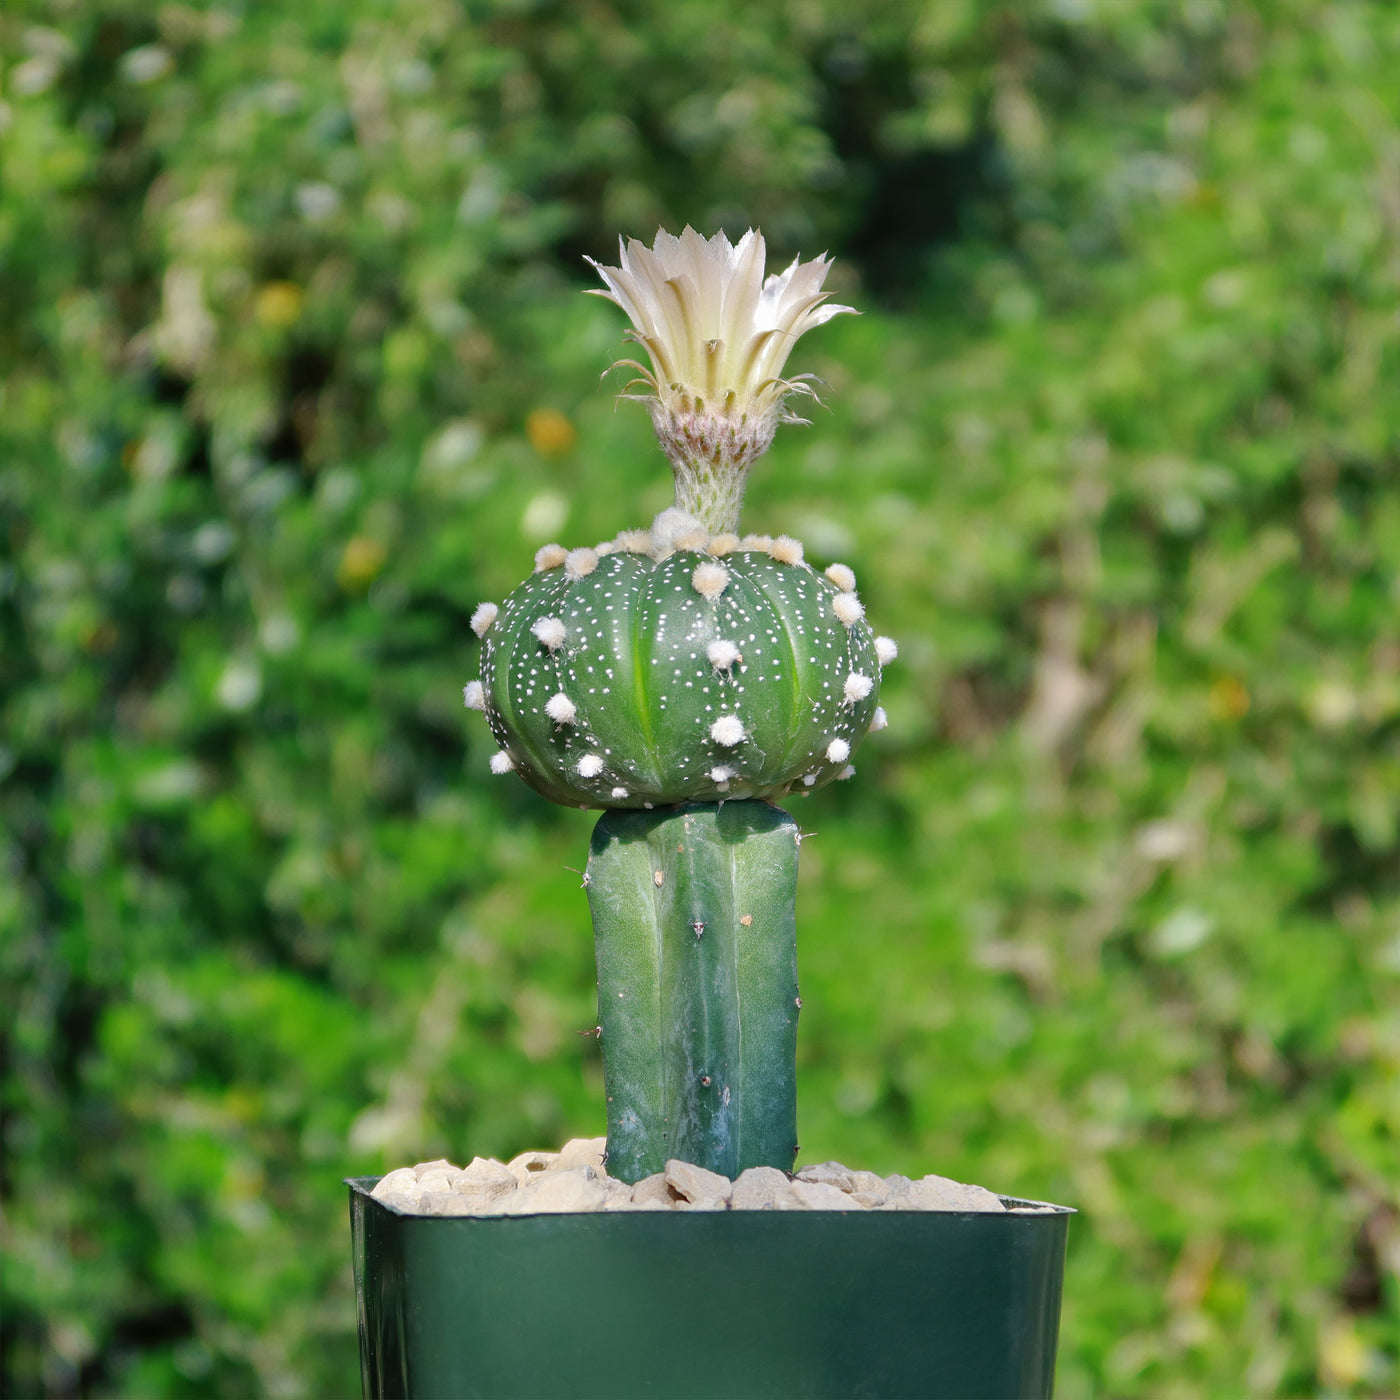 Grafted cactus âsand dollar astrophytum asterias for sale